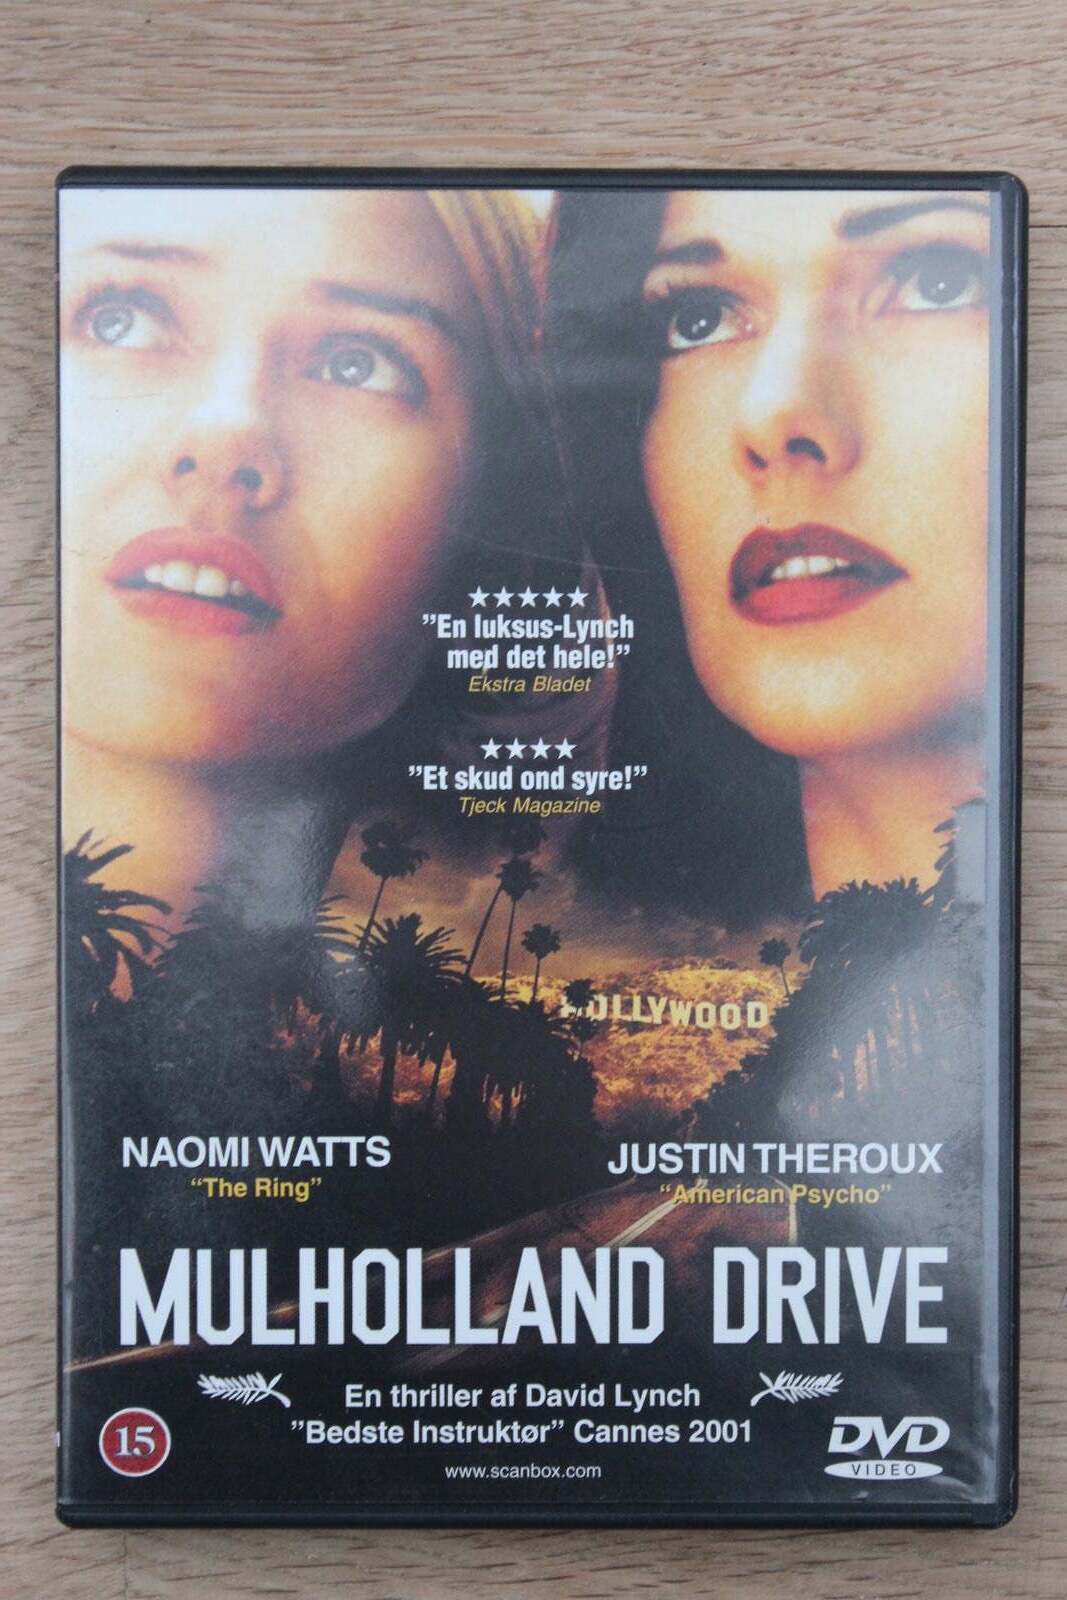 Mulholland Drive, instruktør David Lynch, DVD